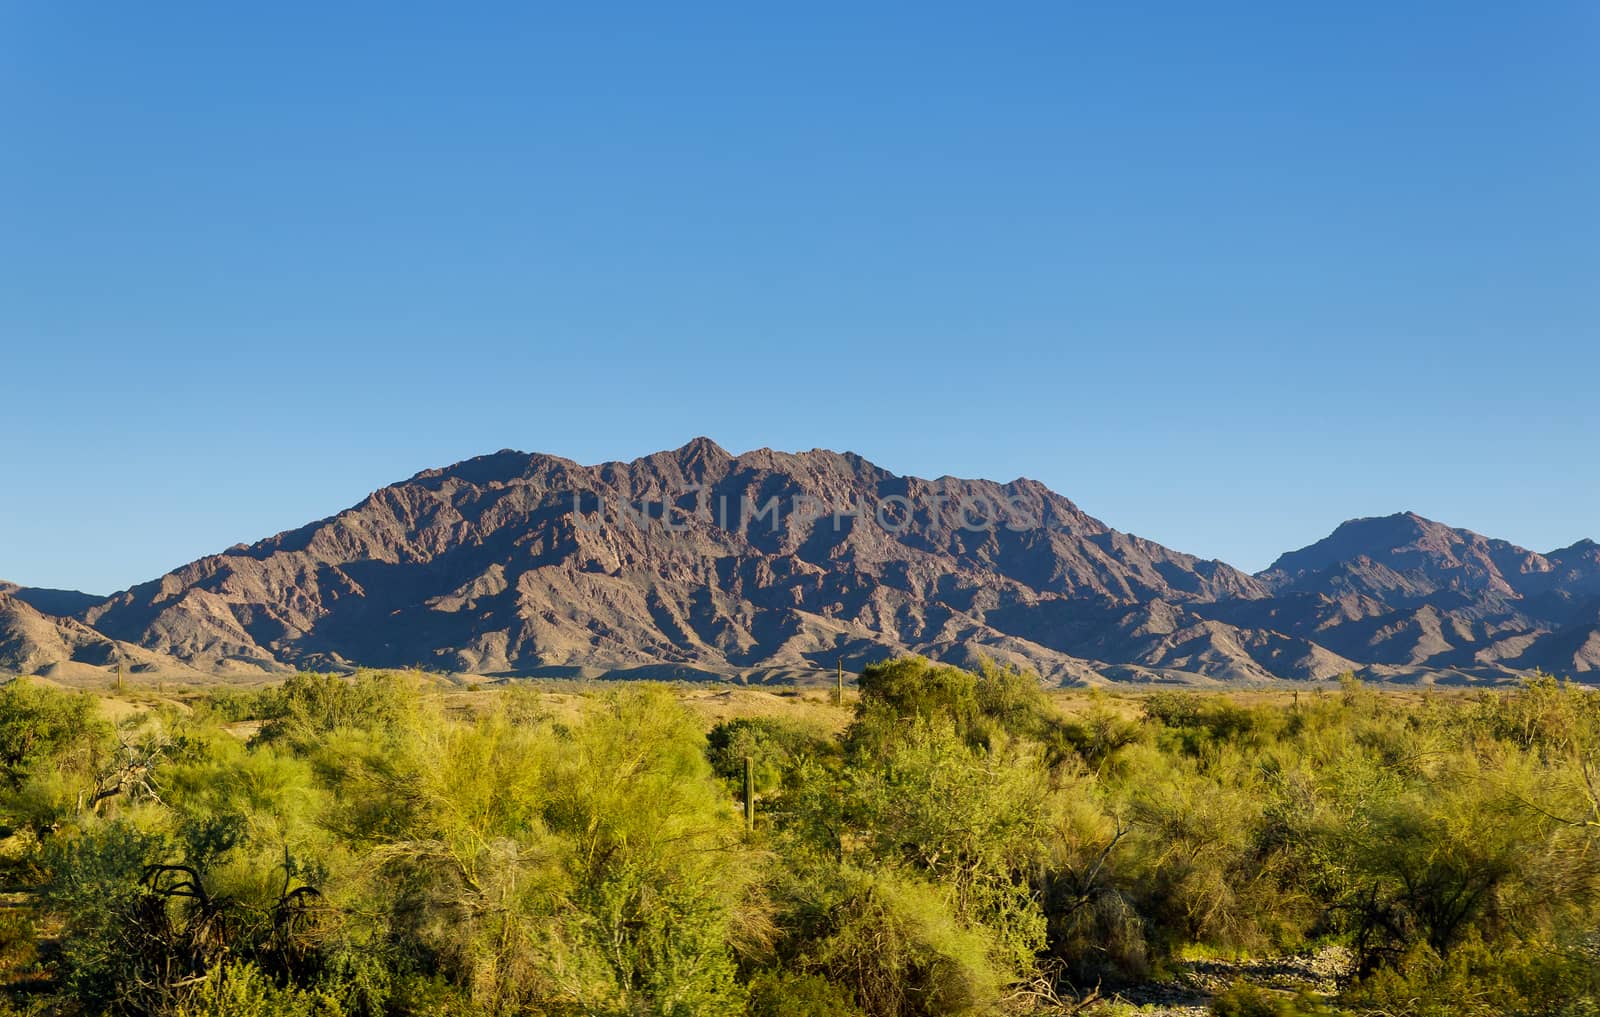 Desert cactus saguaro park Landscape, superstition mountain near Phoenix Arizona